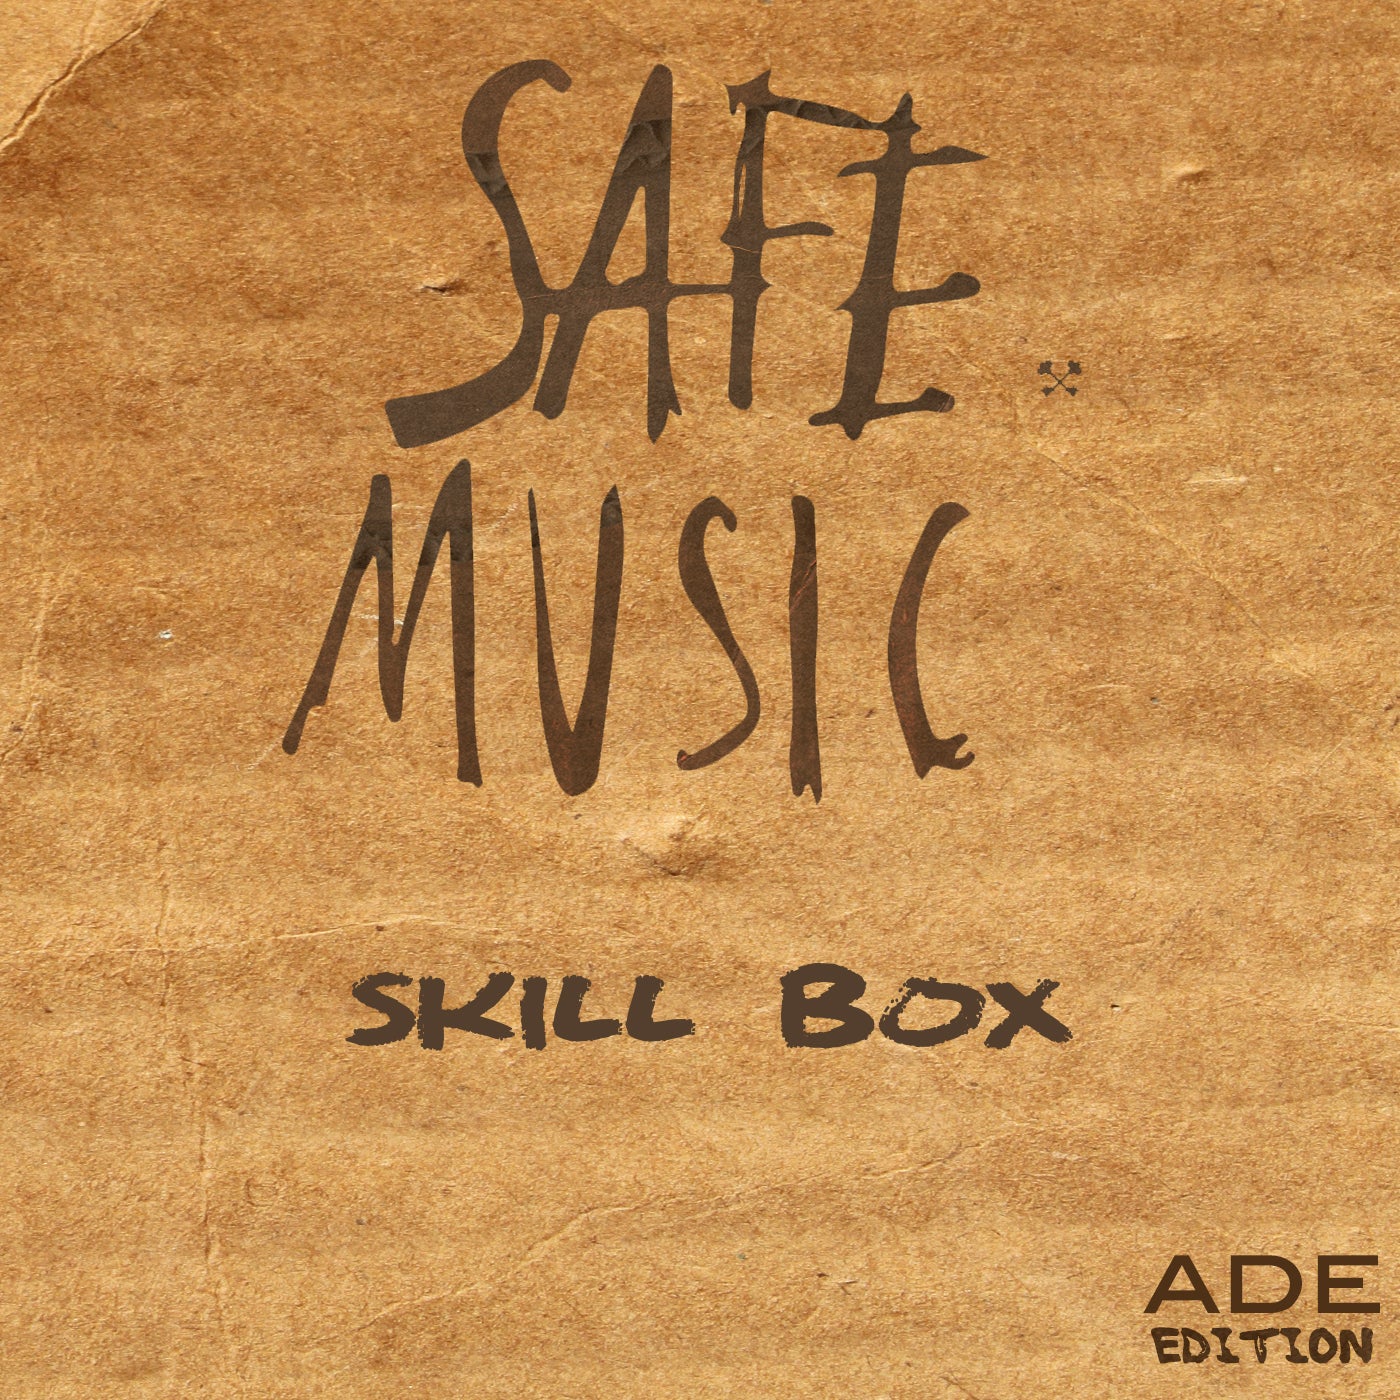 VA - Skill Box, Vol.18 (ADE Edition) [SAFESB018]